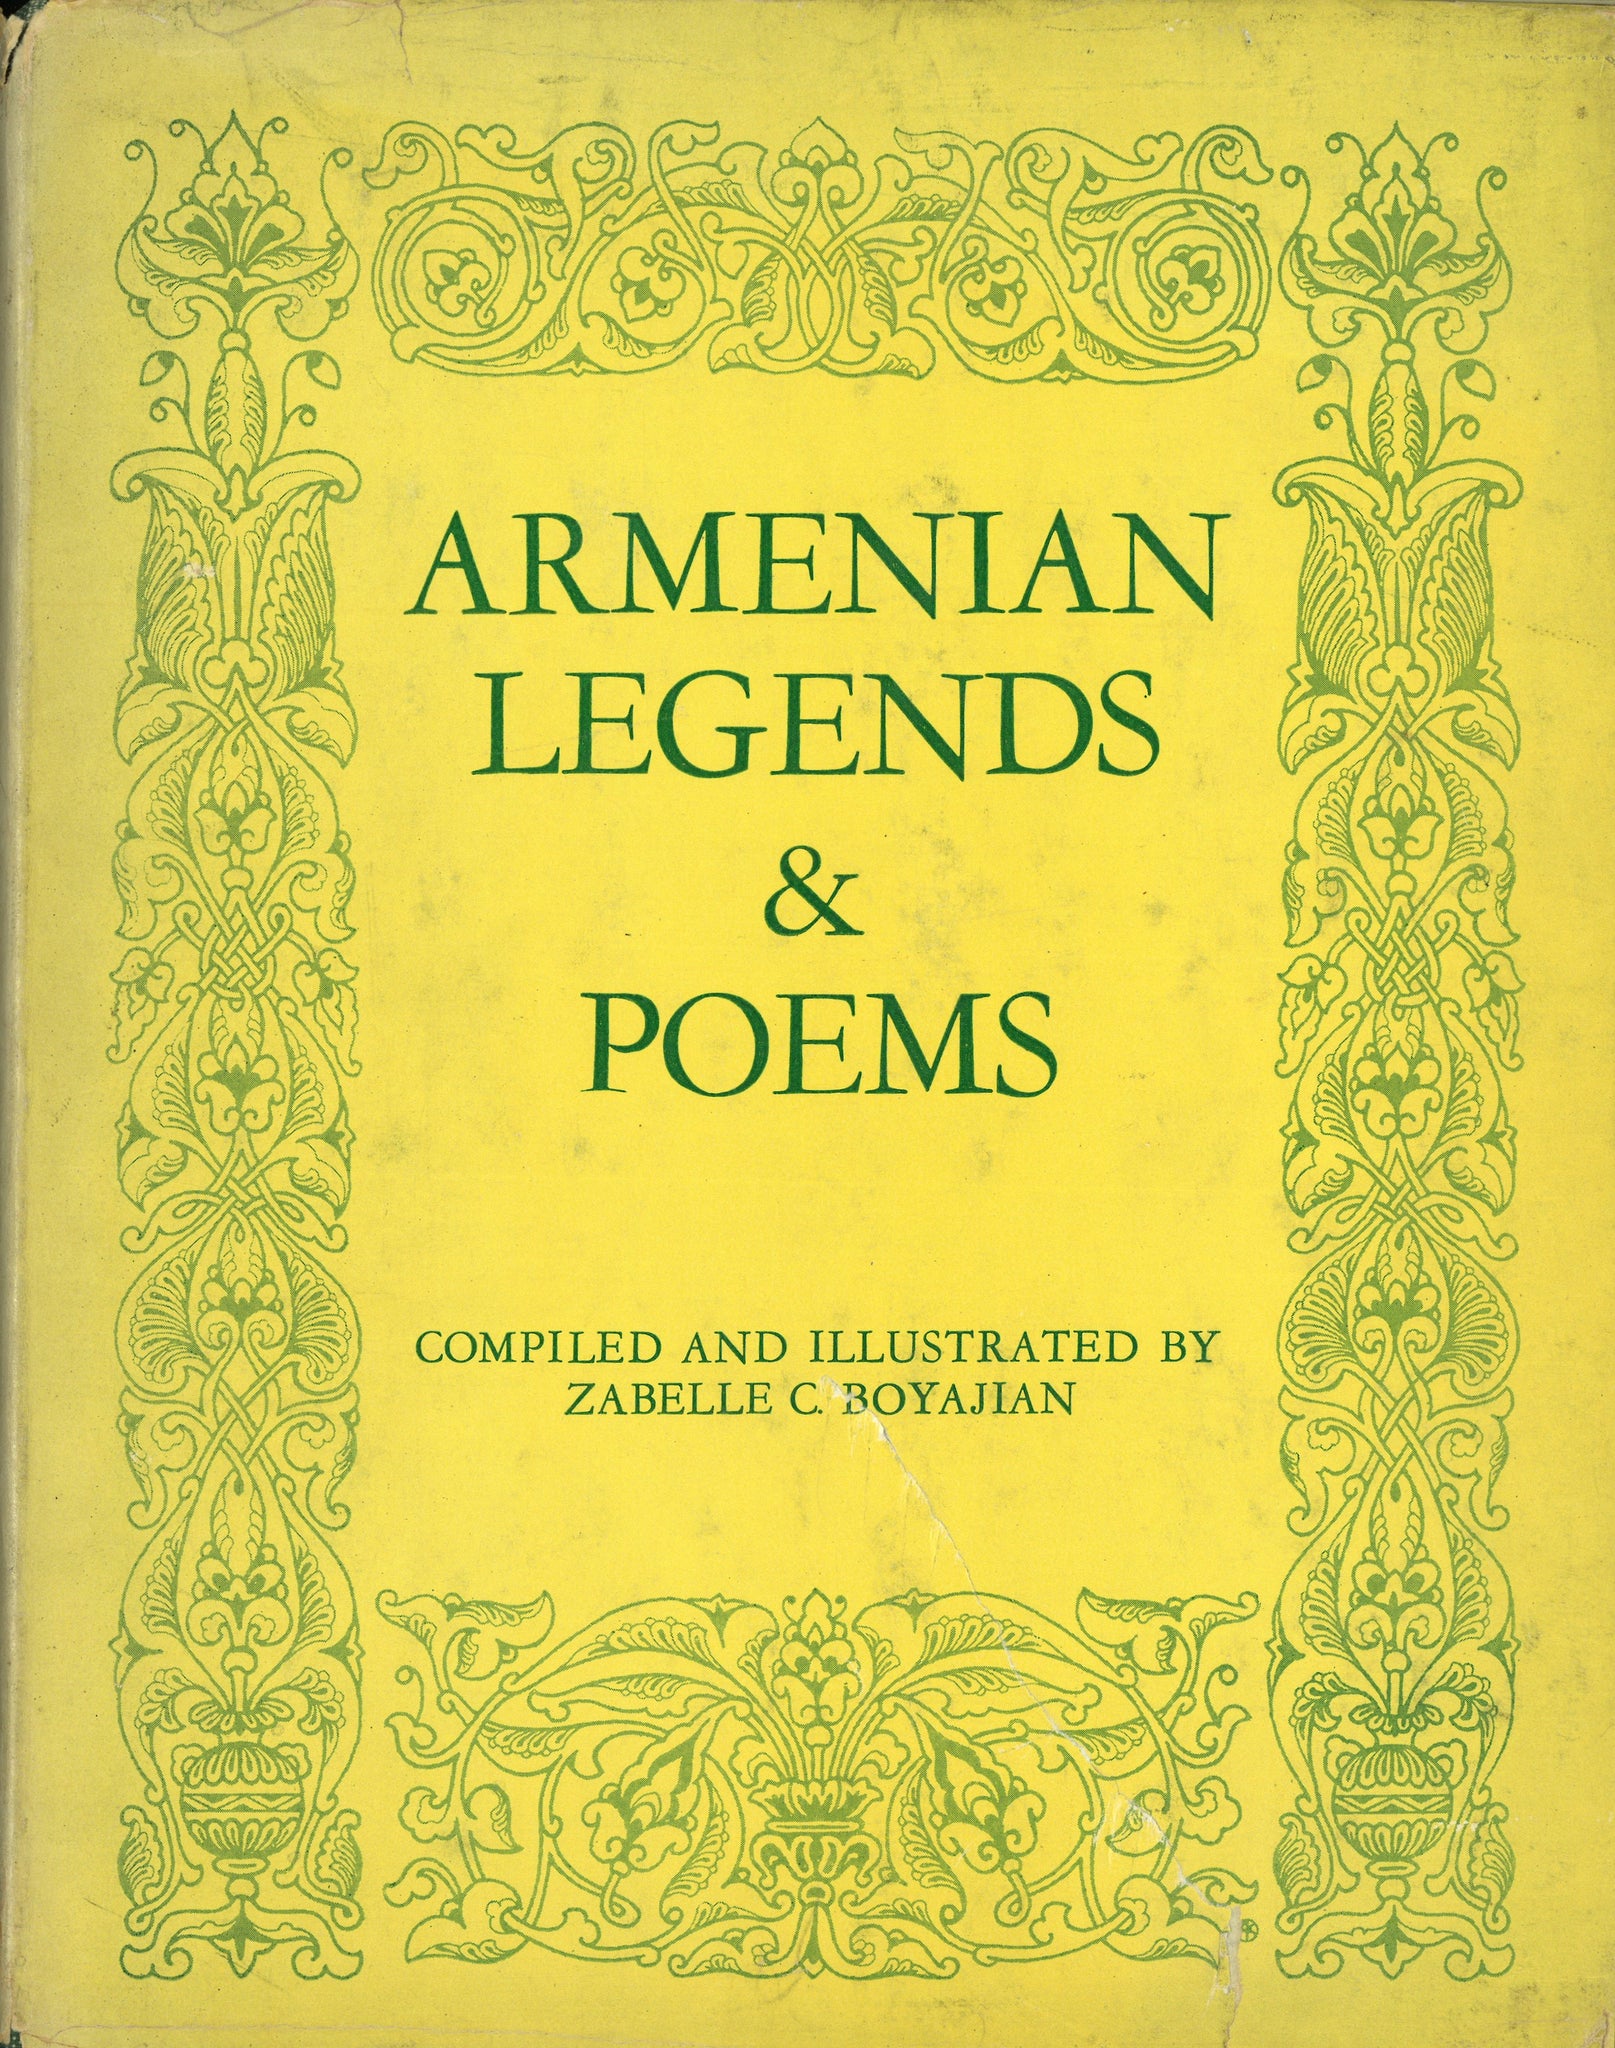 ARMENIAN LEGENDS & POEMS